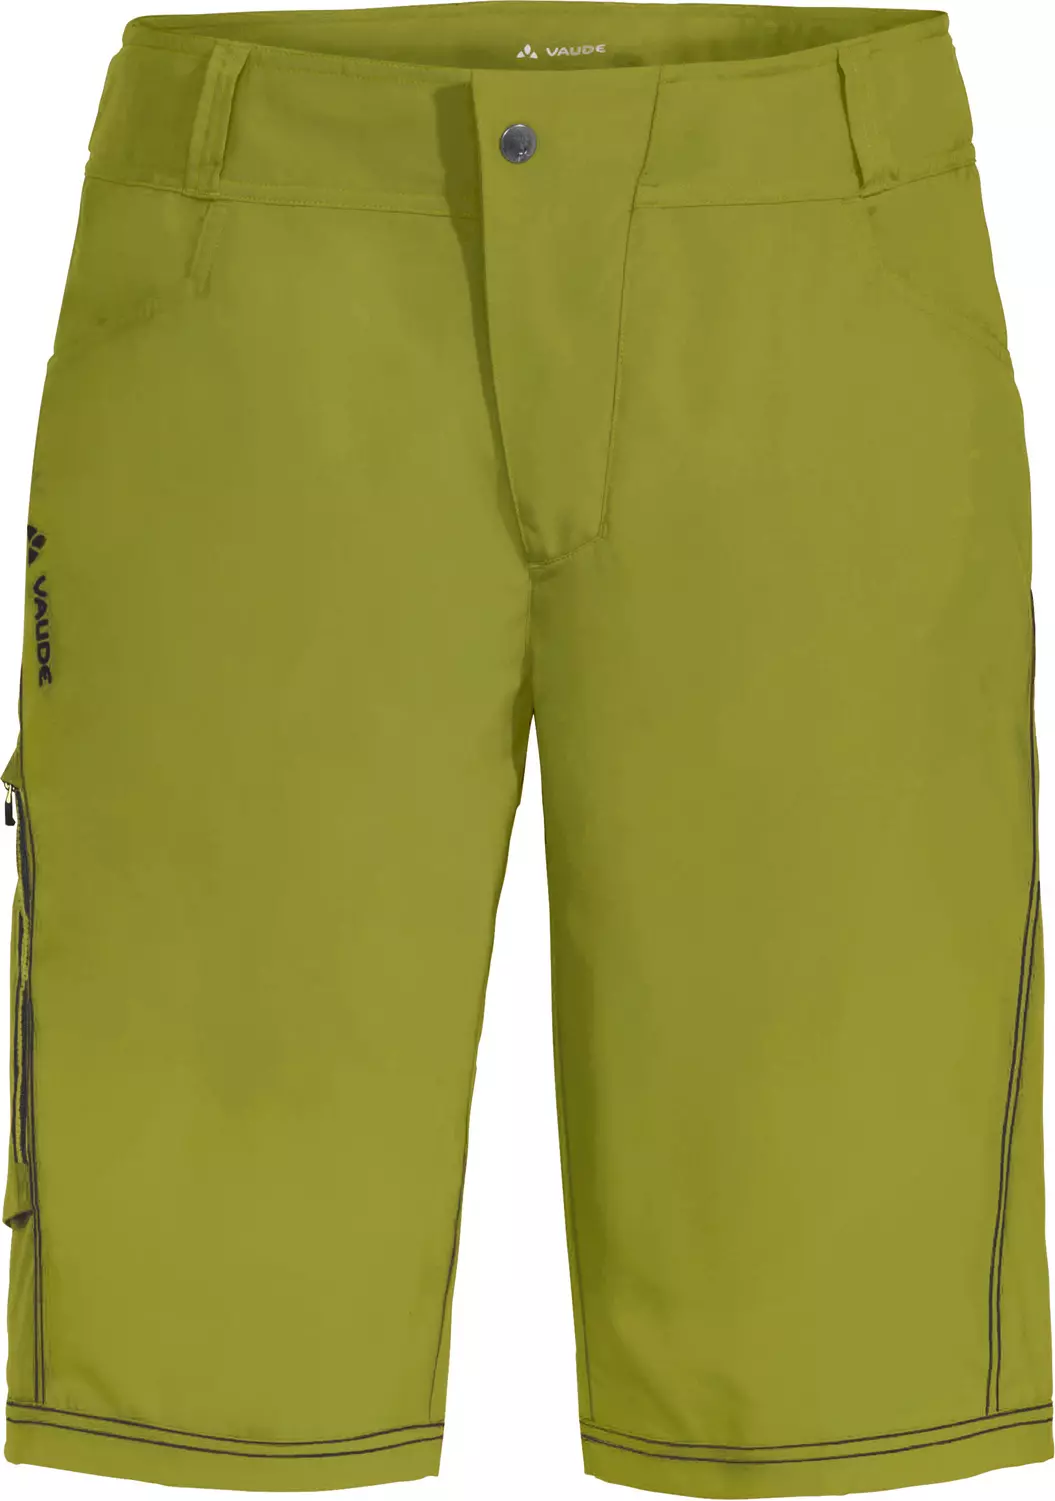 green bicycle shorts Gadżety MEN\'S | insole reklamowa Ledro CYCLING \\ odzież VAUDE | CLOTHING \\ Vaude BRANDS Red Green Dystrybutor with Bird - Markowe Men\'s i